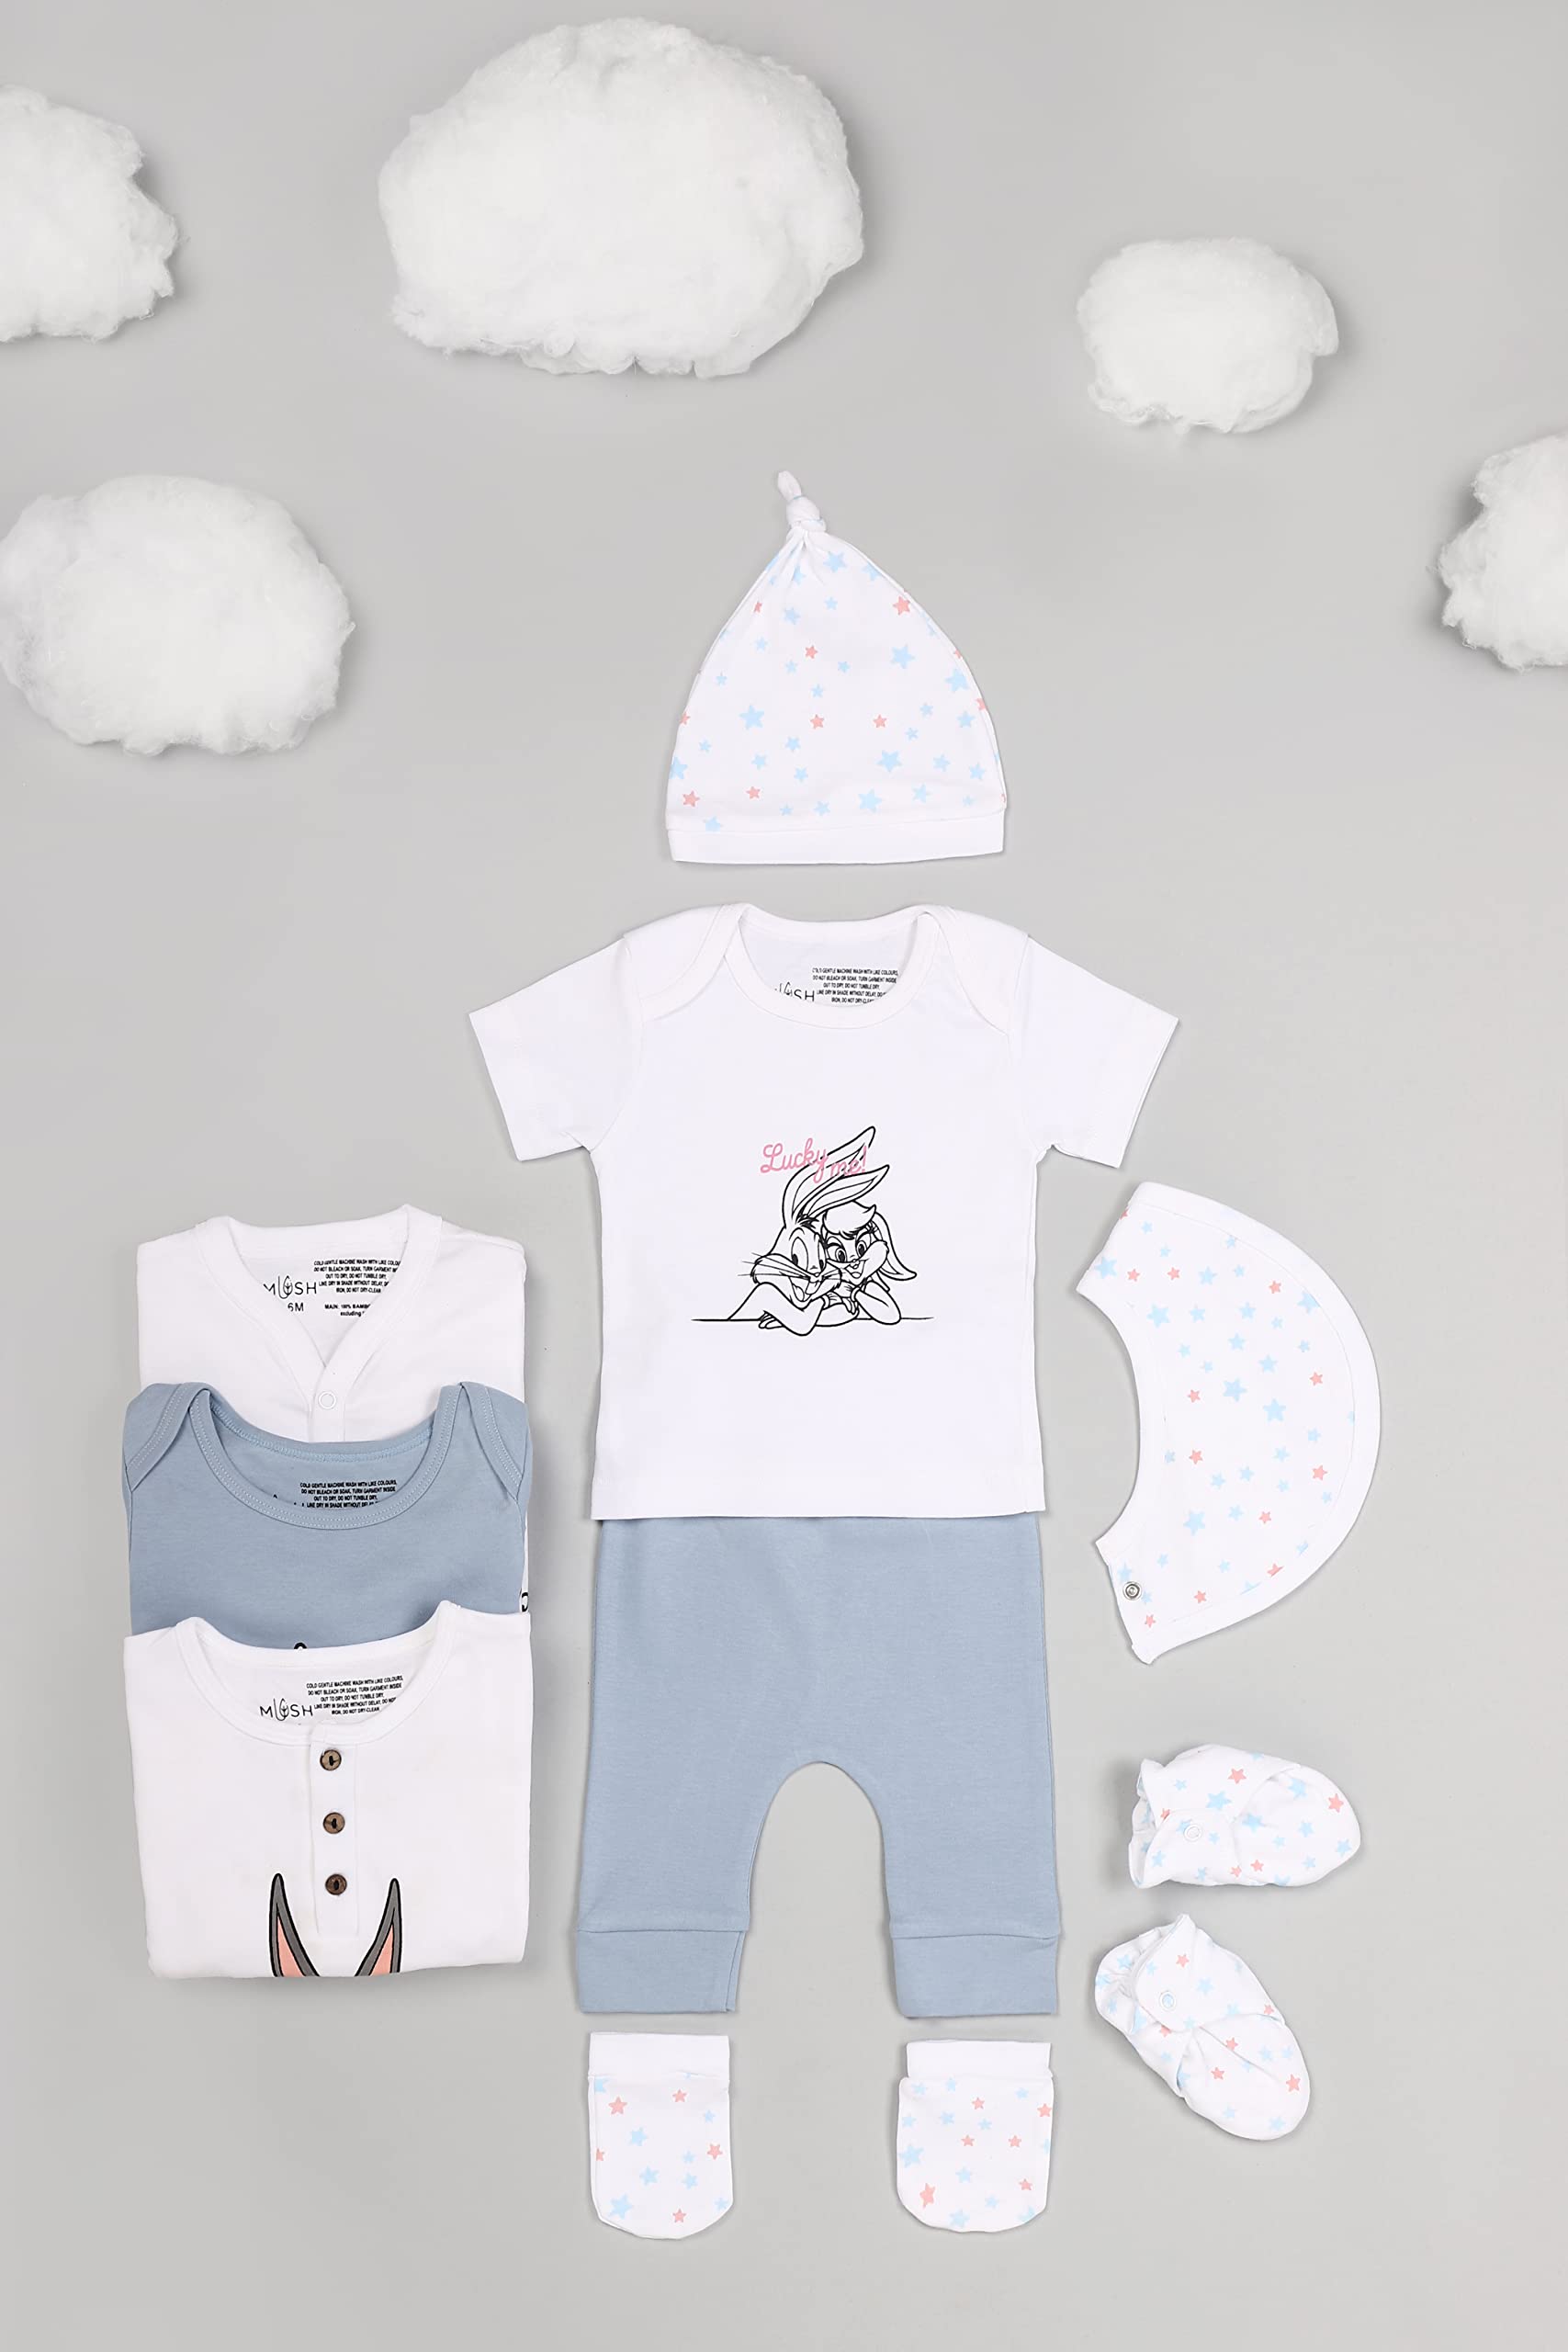 Mush Ultra Soft Bamboo Unisex Fabric Unisex Gift Set for New Born Baby/Kids Pack of 9, (3-6 Month, Stary Night)